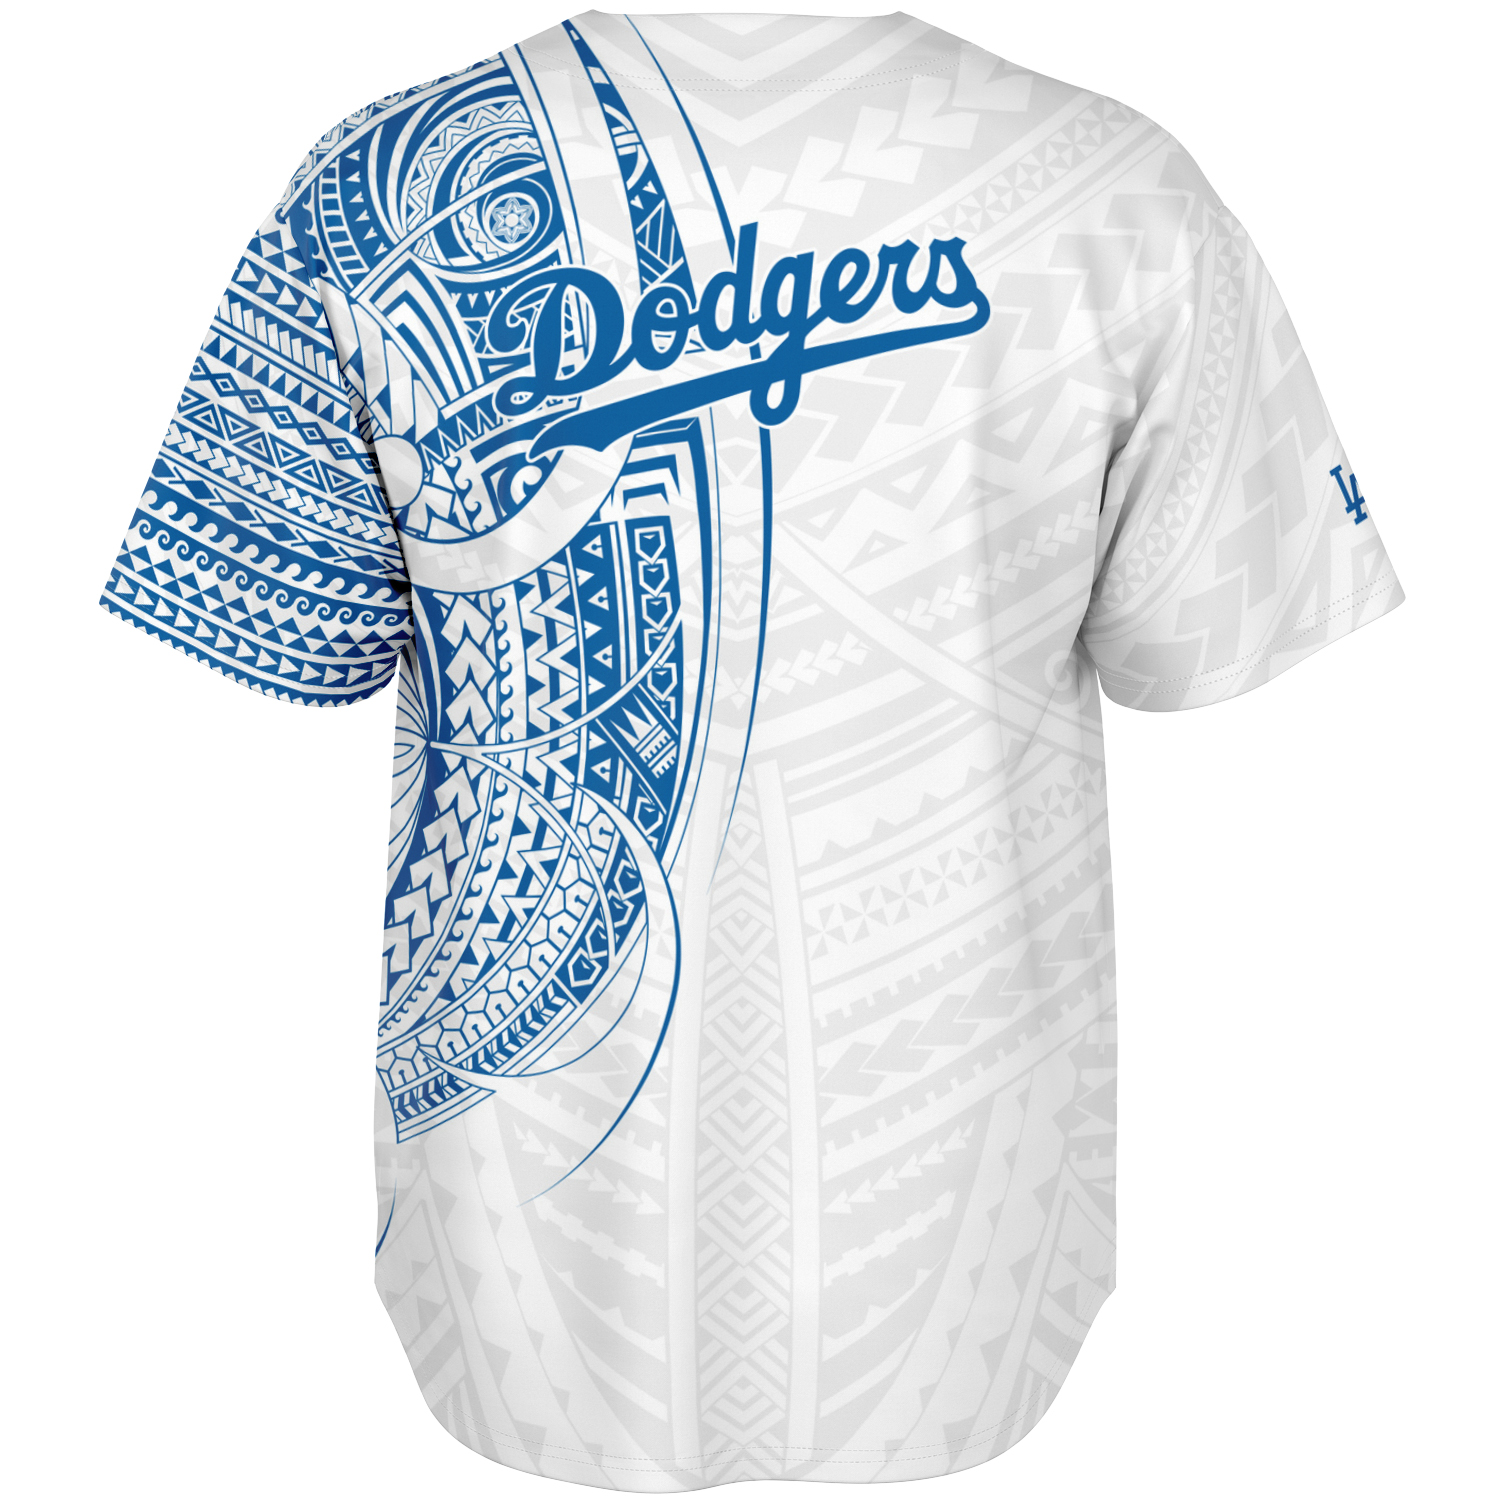 Disneyland (Los Angeles Dodgers style) White & Blue (M) Limited Baseball  jersey